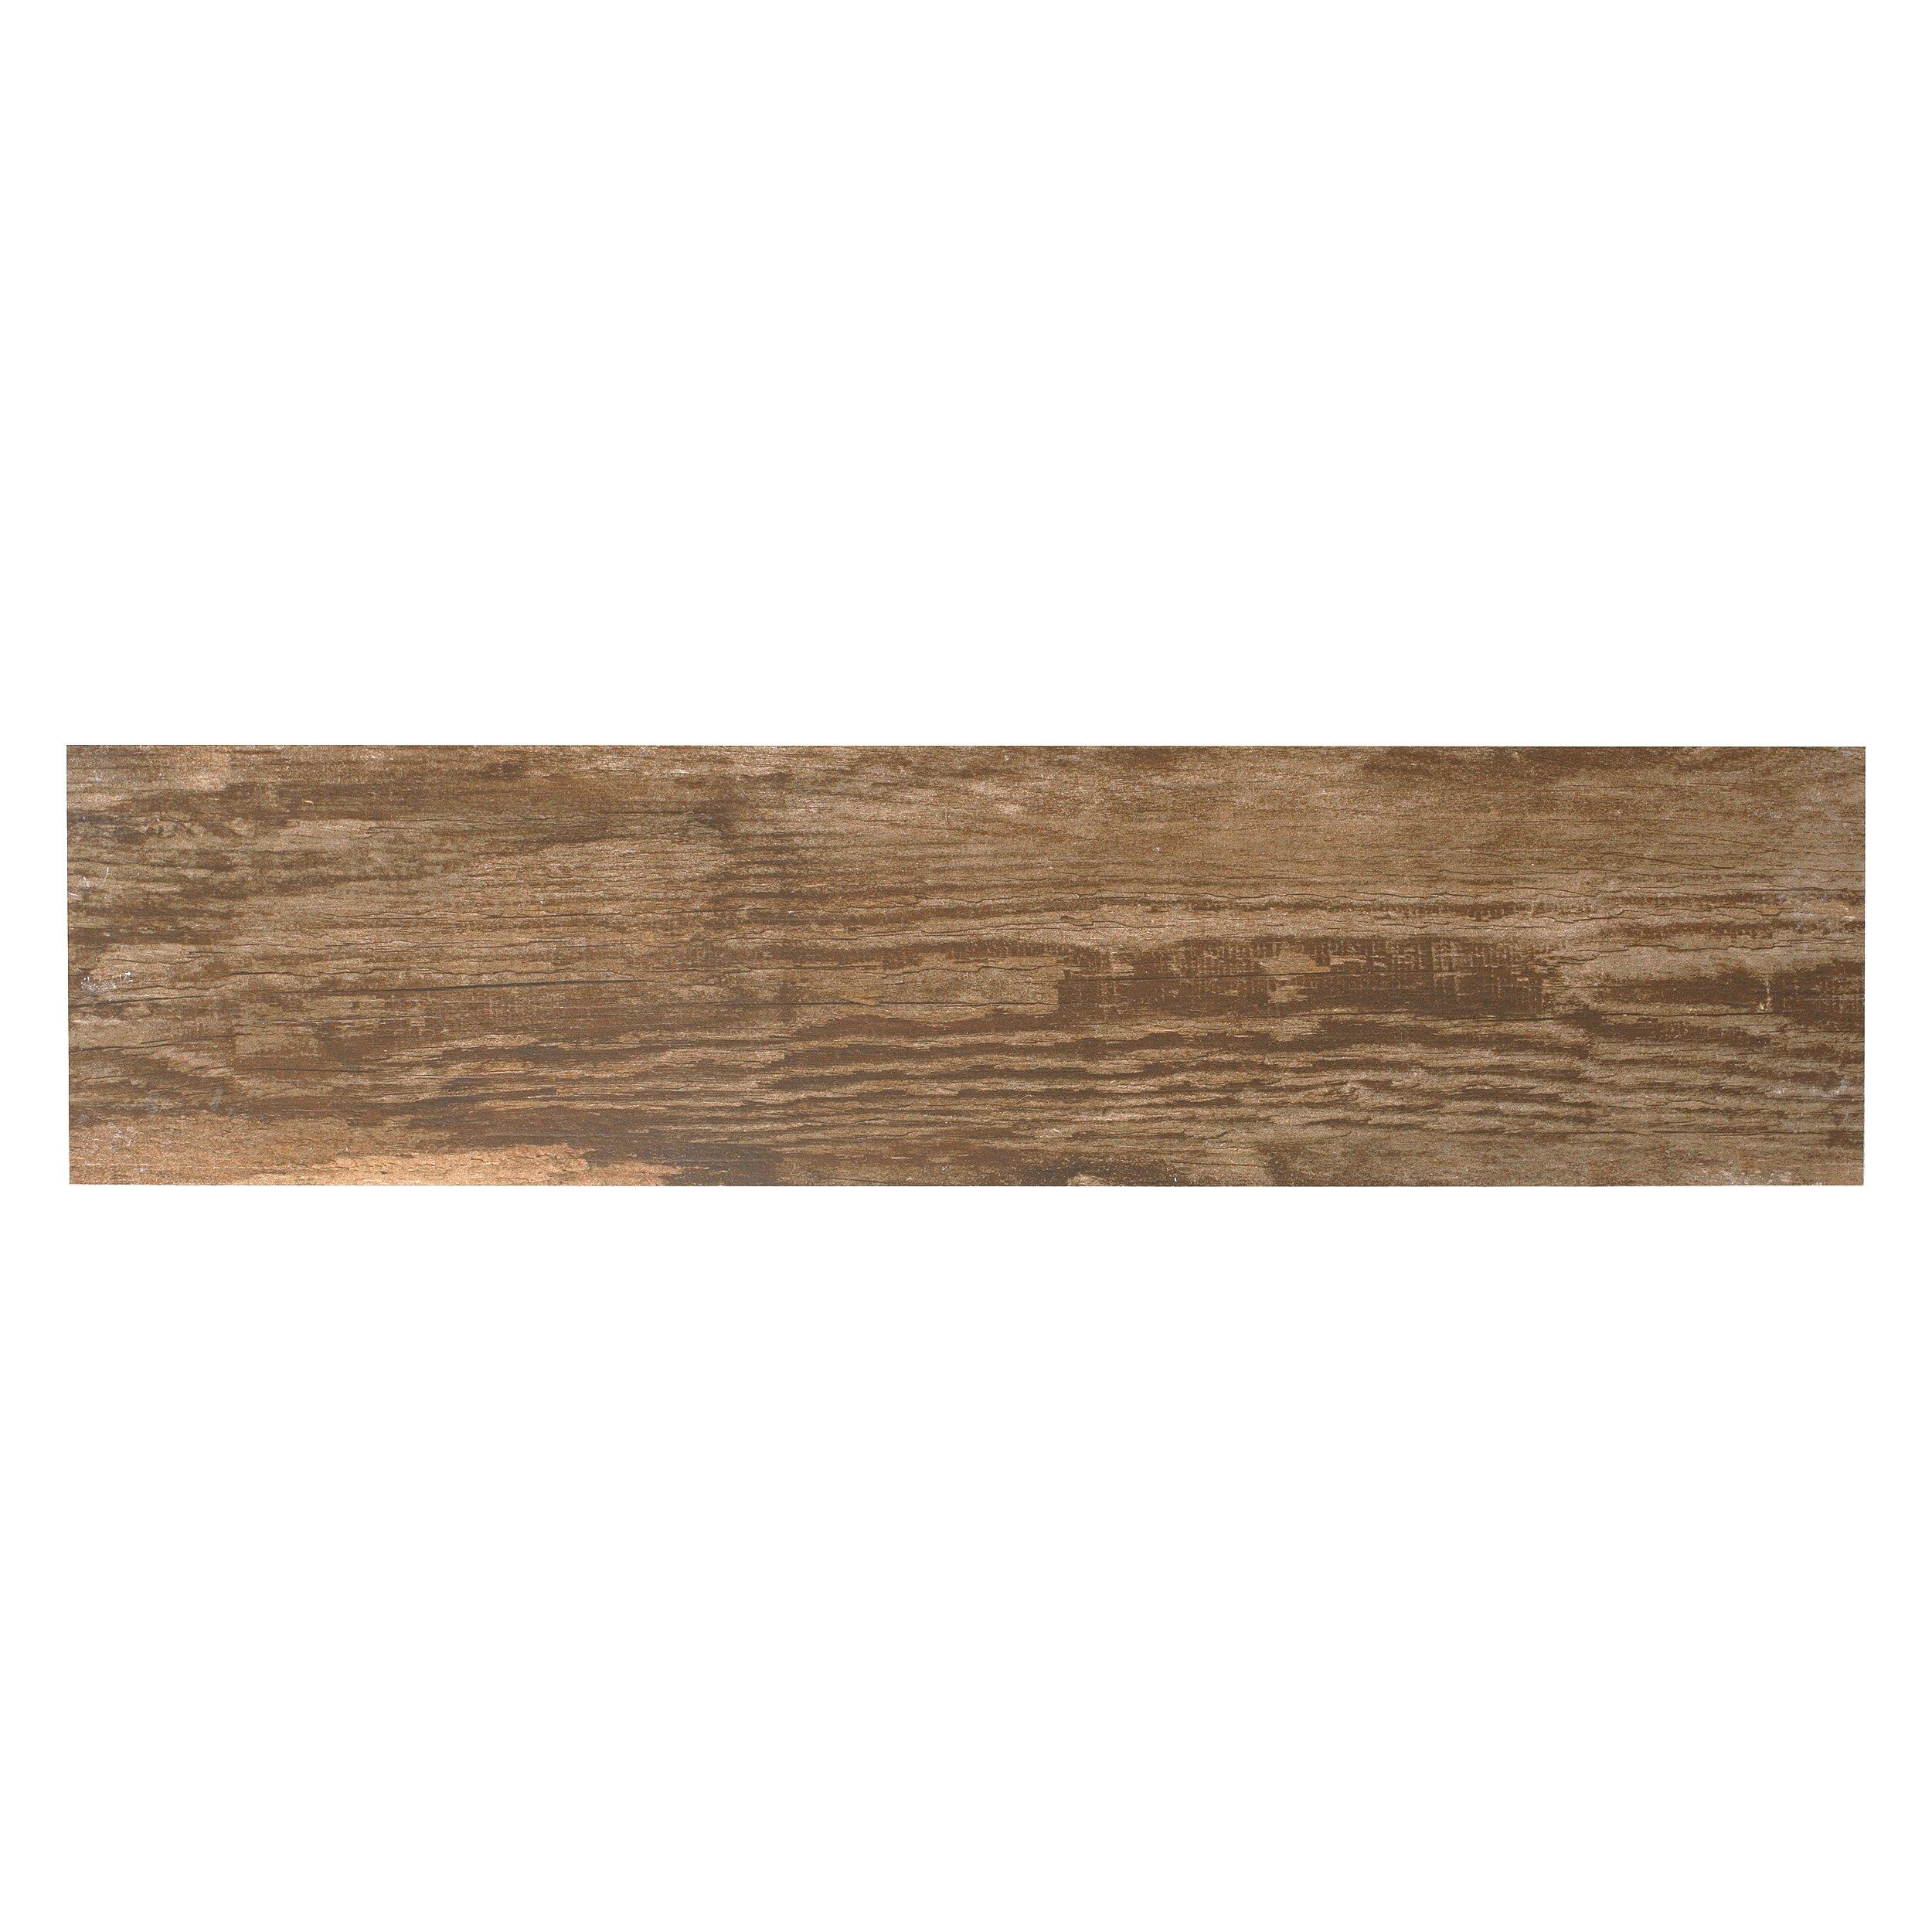 Austel Brown Wood Plank Porcelain Tile - 8 x 48 - 100612076 | Floor and ...